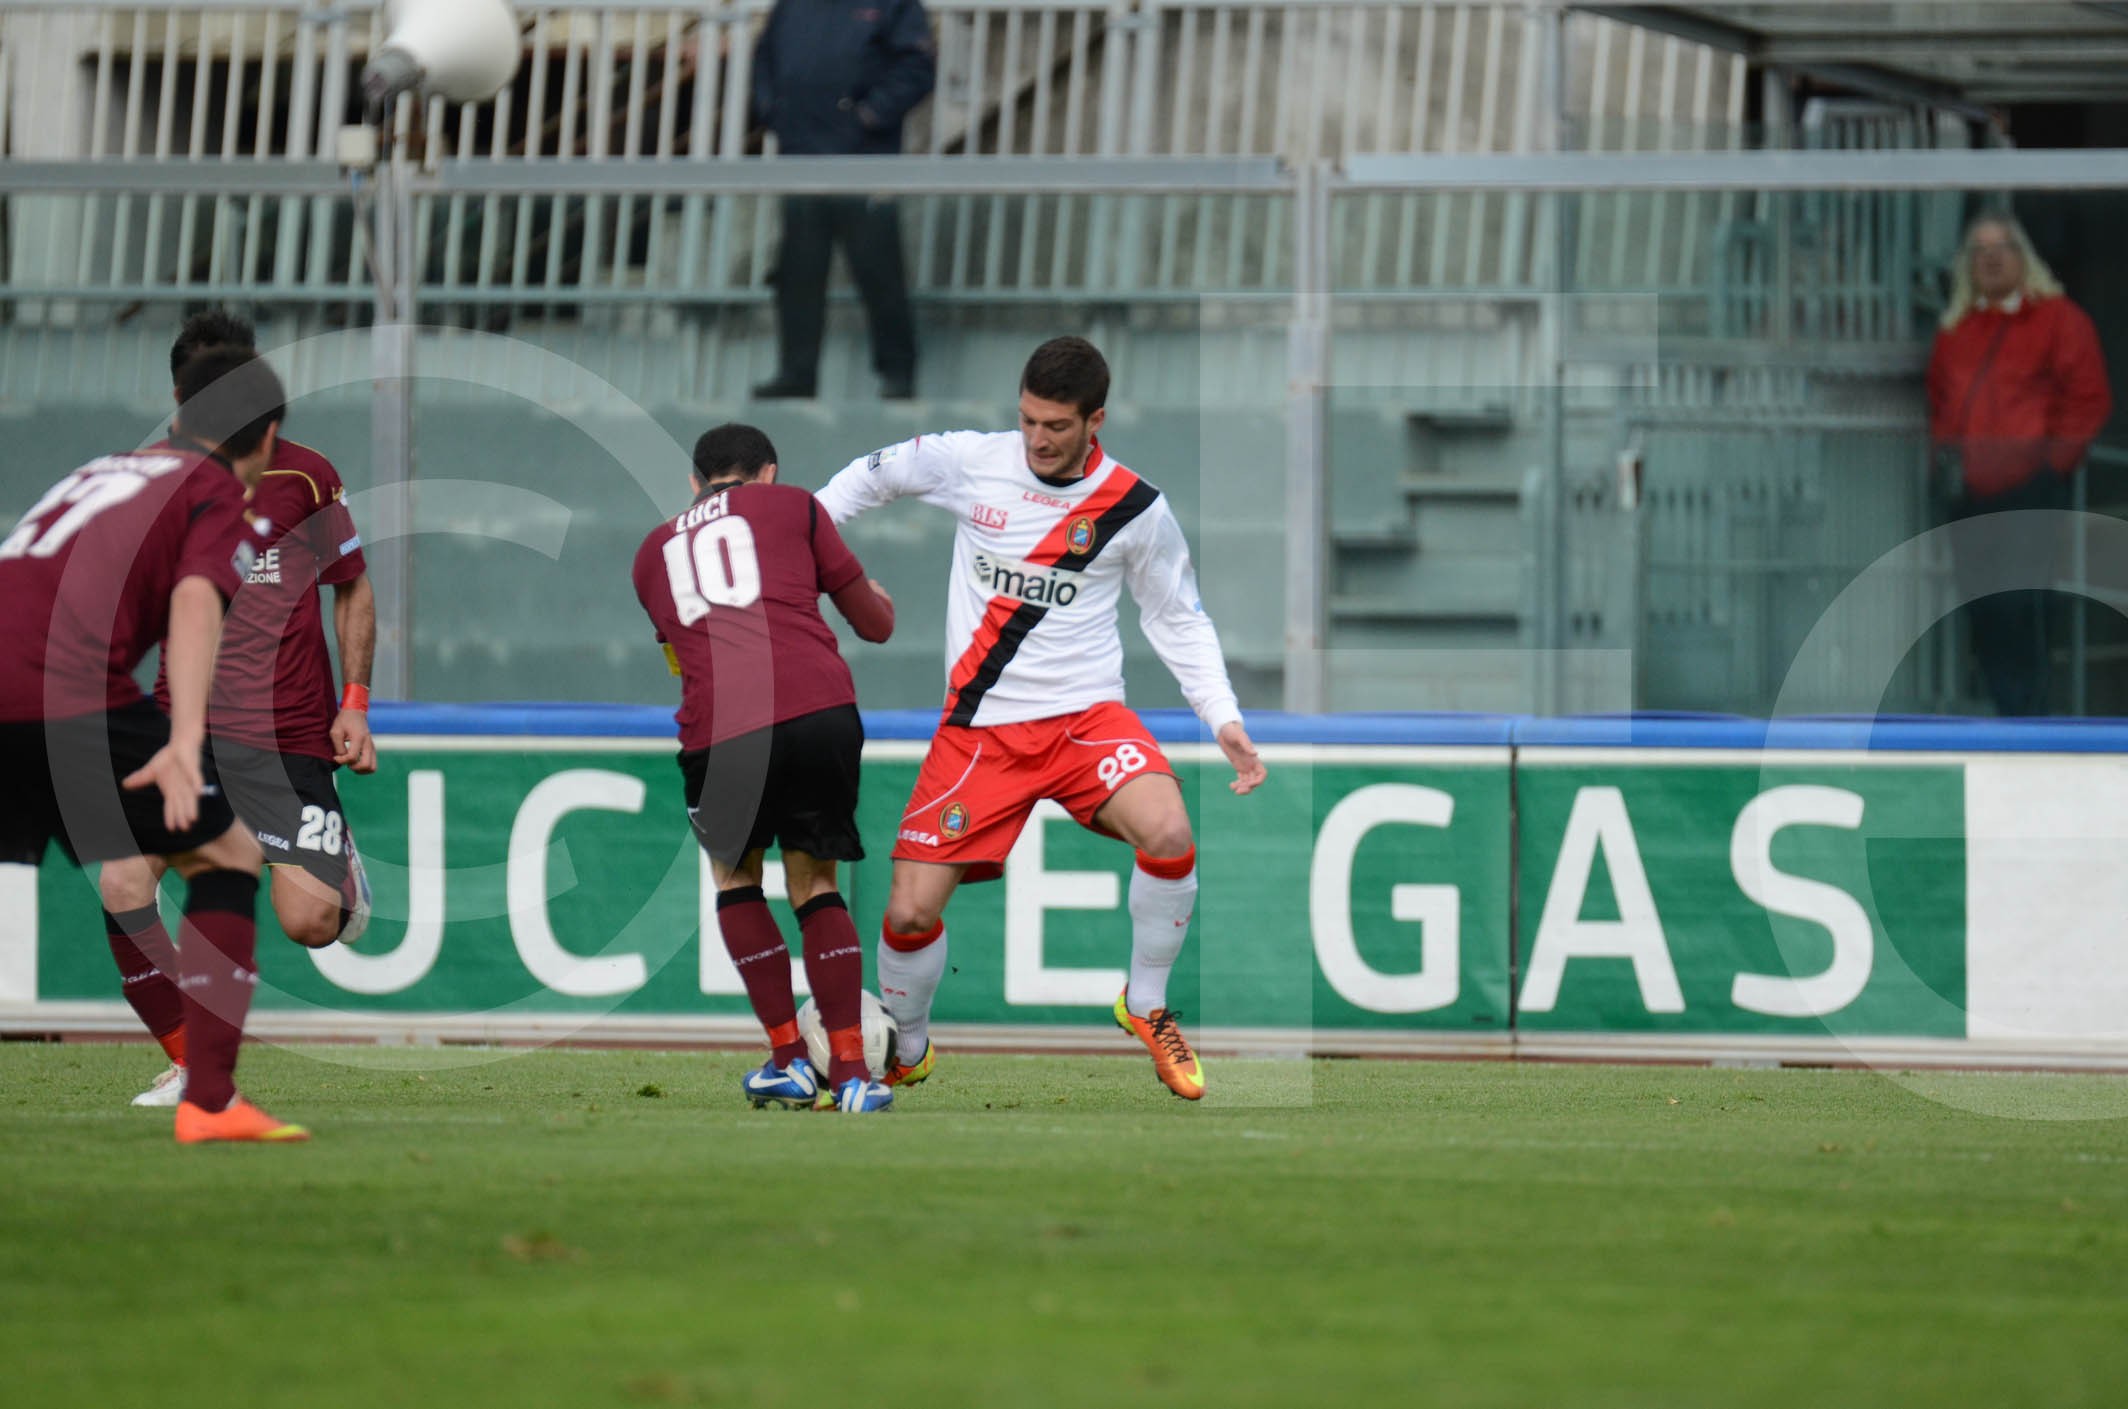 Livorno-Virtus Lanciano 2-0